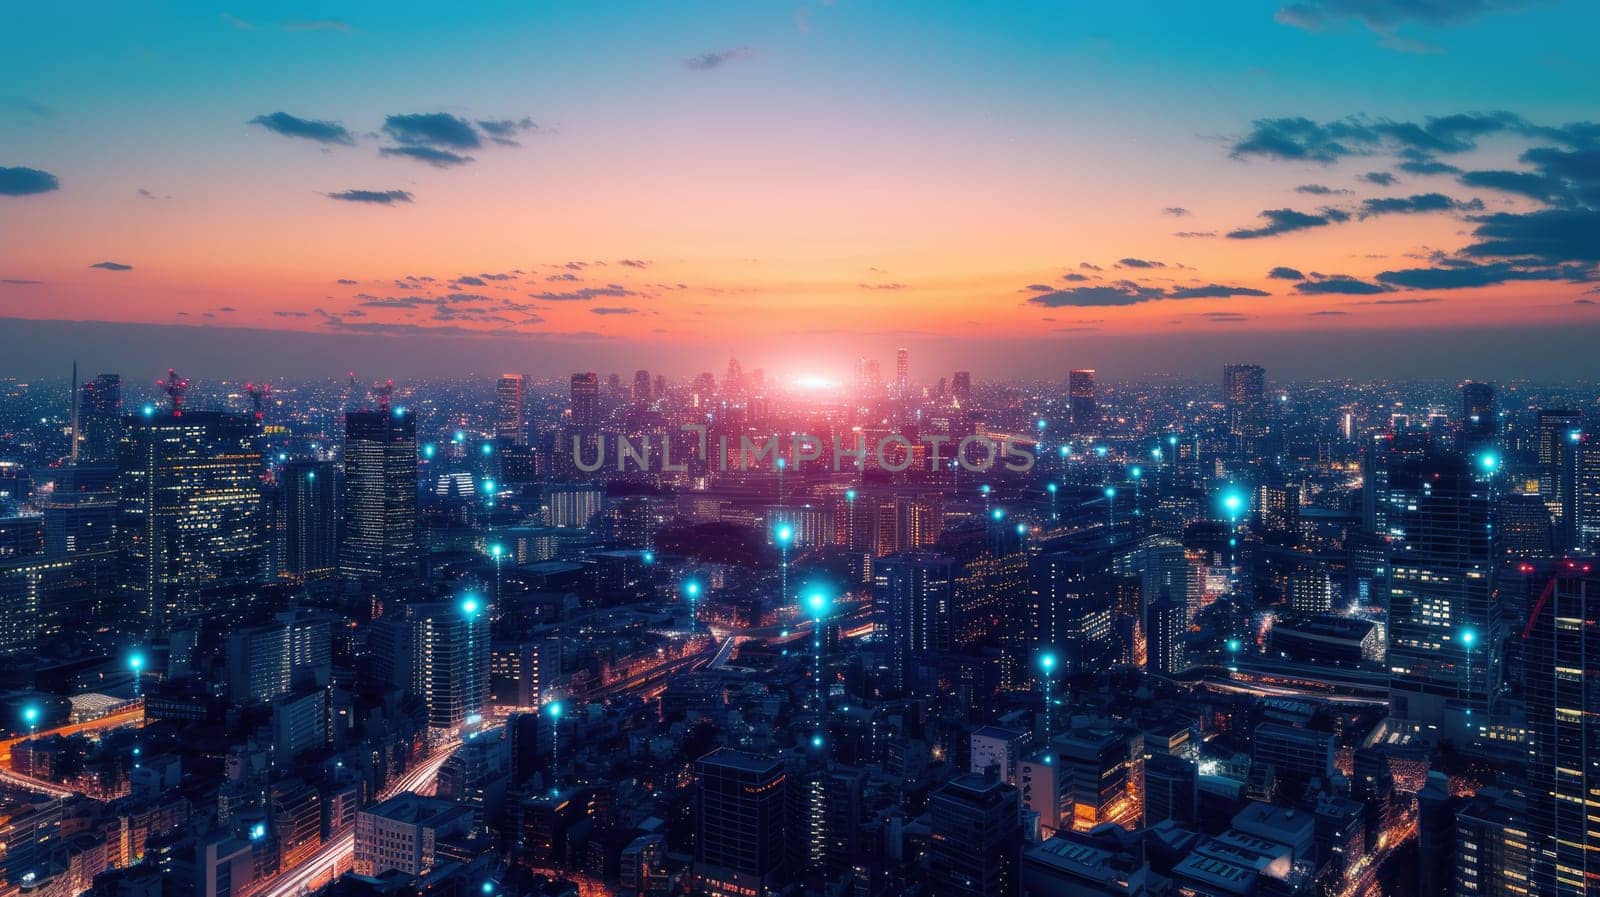 Futuristic Smart City Network Concept AIG41 by biancoblue